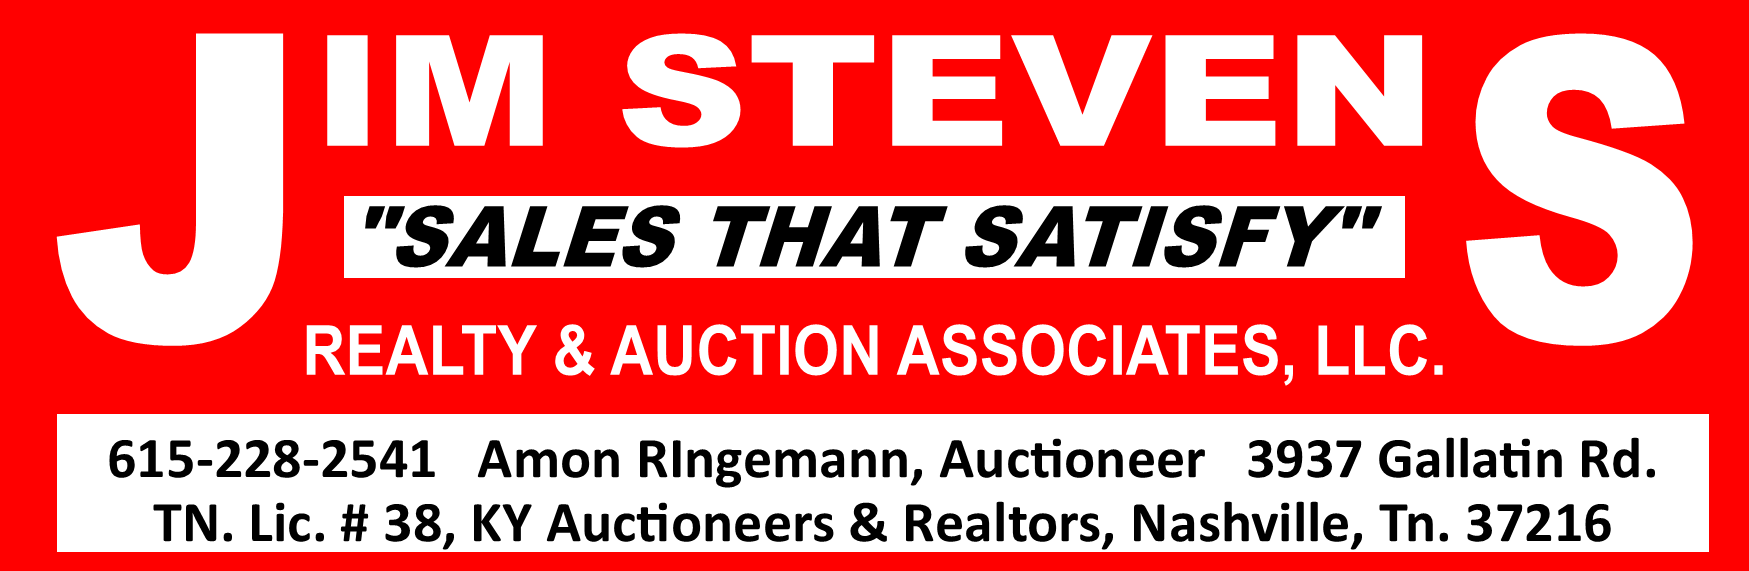 Jim Stevens Realty & Auction Associates logo